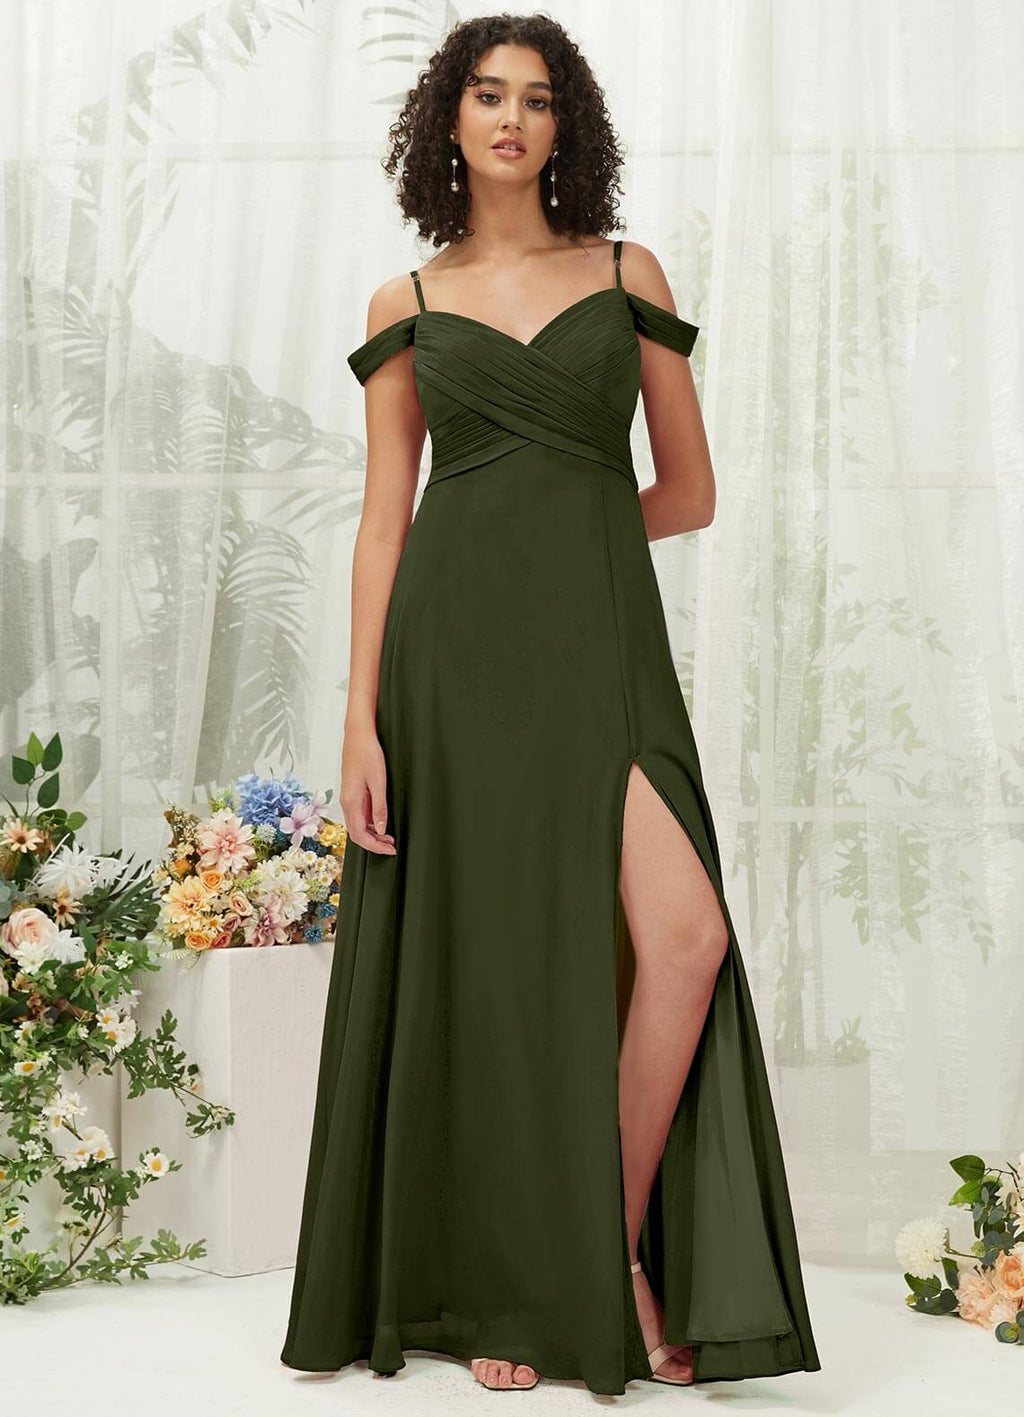 NZ Bridal Olive Convertible Chiffon Flowy Maxi Bridesmaid Dress with Slit TC30219 Celia a